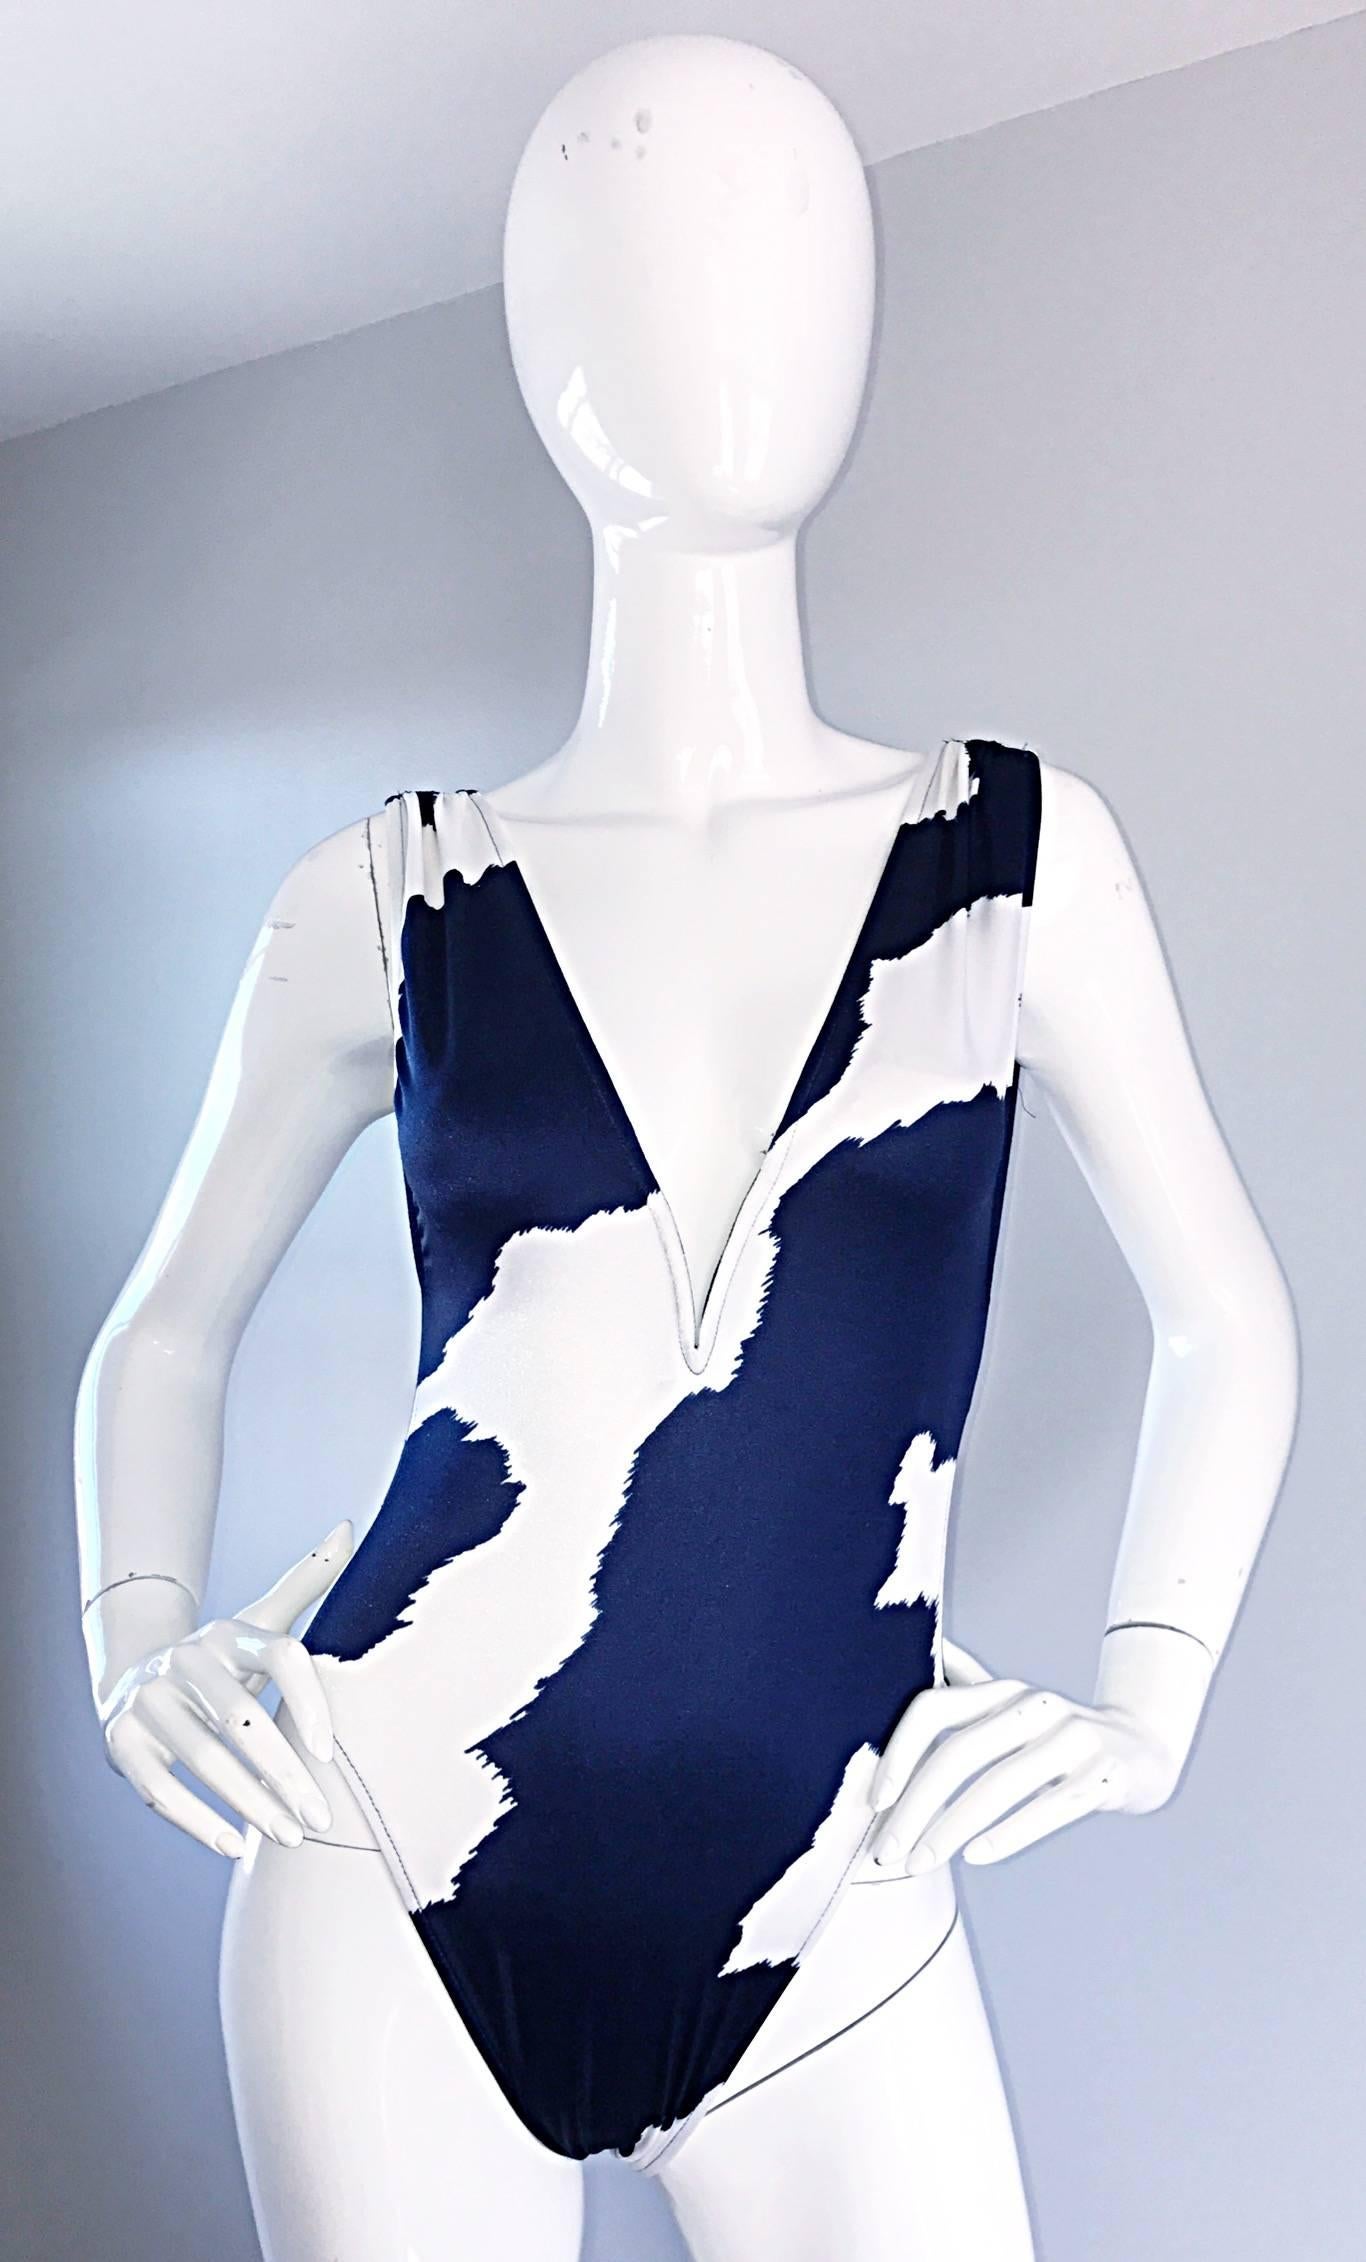 Women's Amazing Bill BLASS Navy Blue and White Plunging One Piece Swimsuit Bodysuit